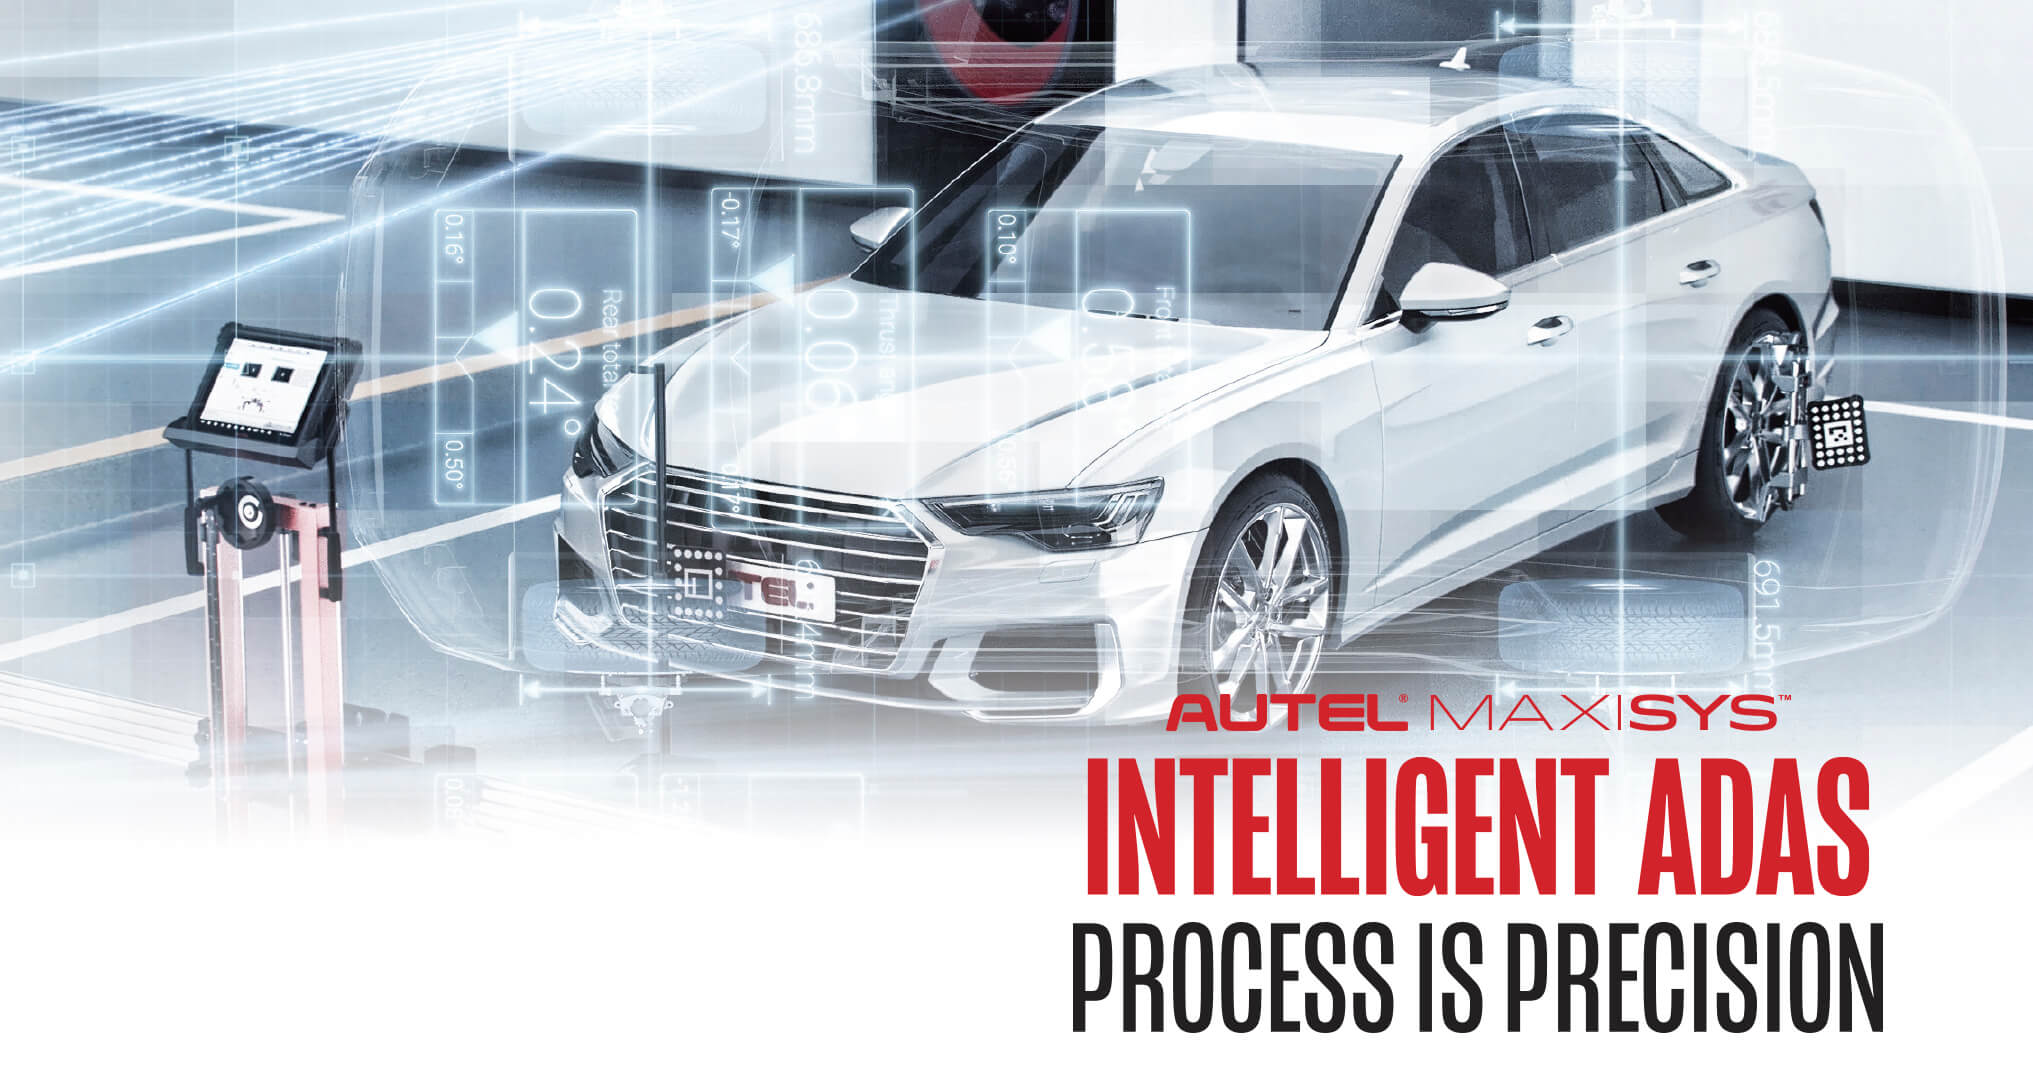 Autel MaxiSYS Intelligent ADAS Process is Precision copy